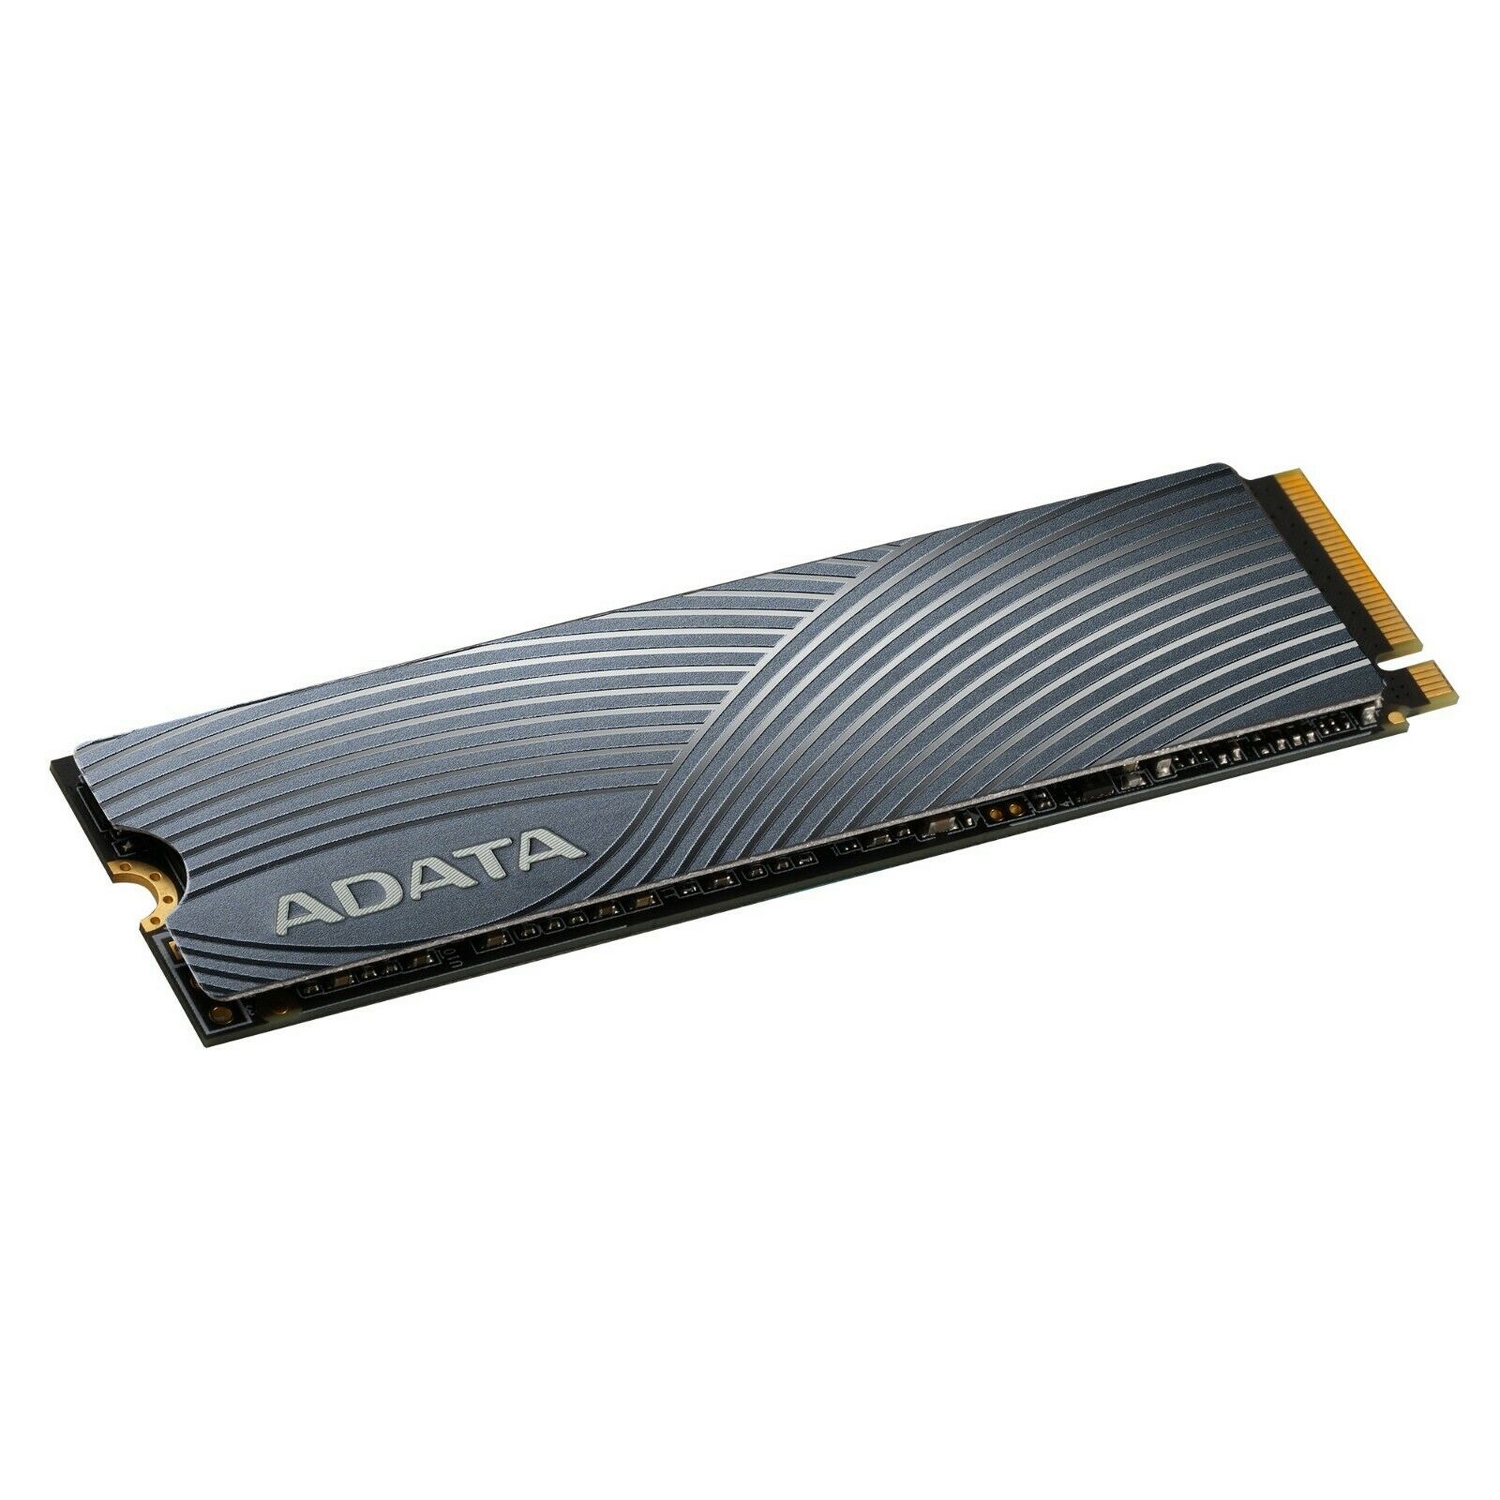 ADATA Swordfish Series: 2TB NVMe PCIE 3.0 SSD $102.99